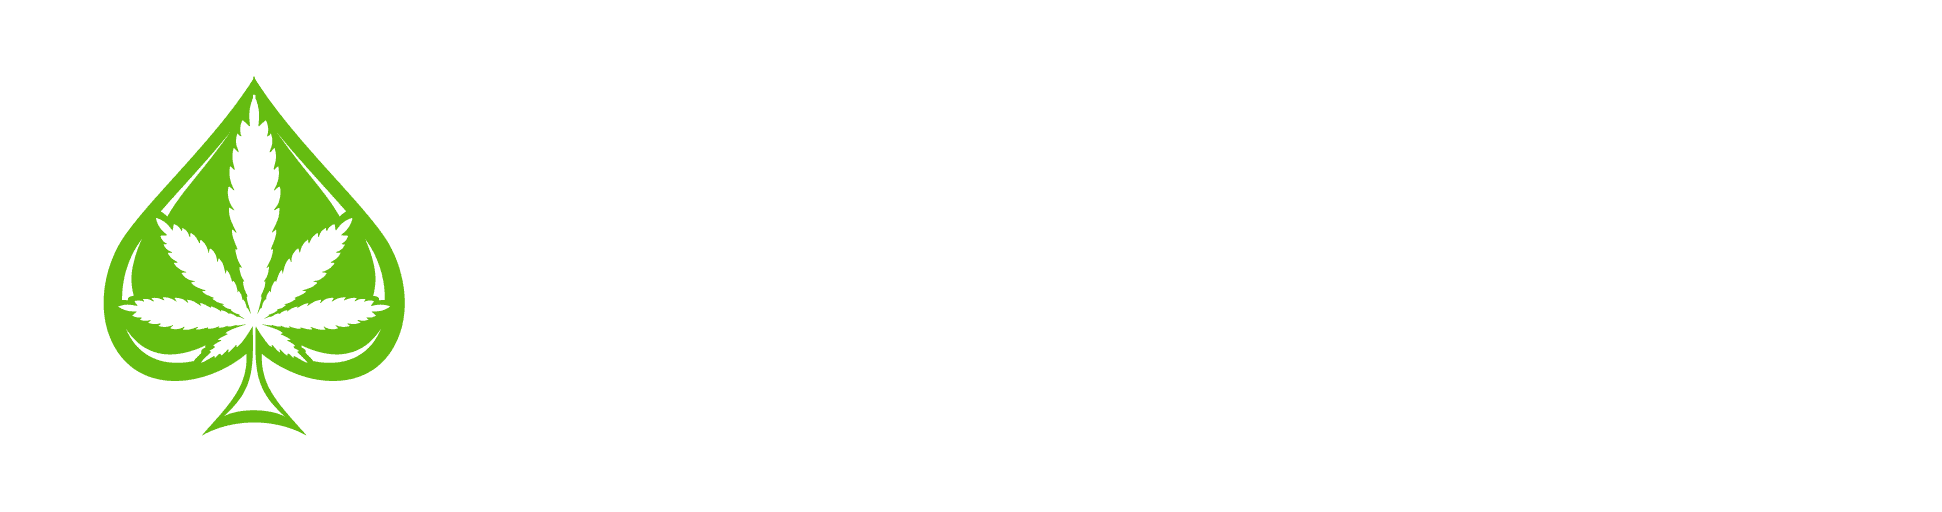 The Green Ace logo 1